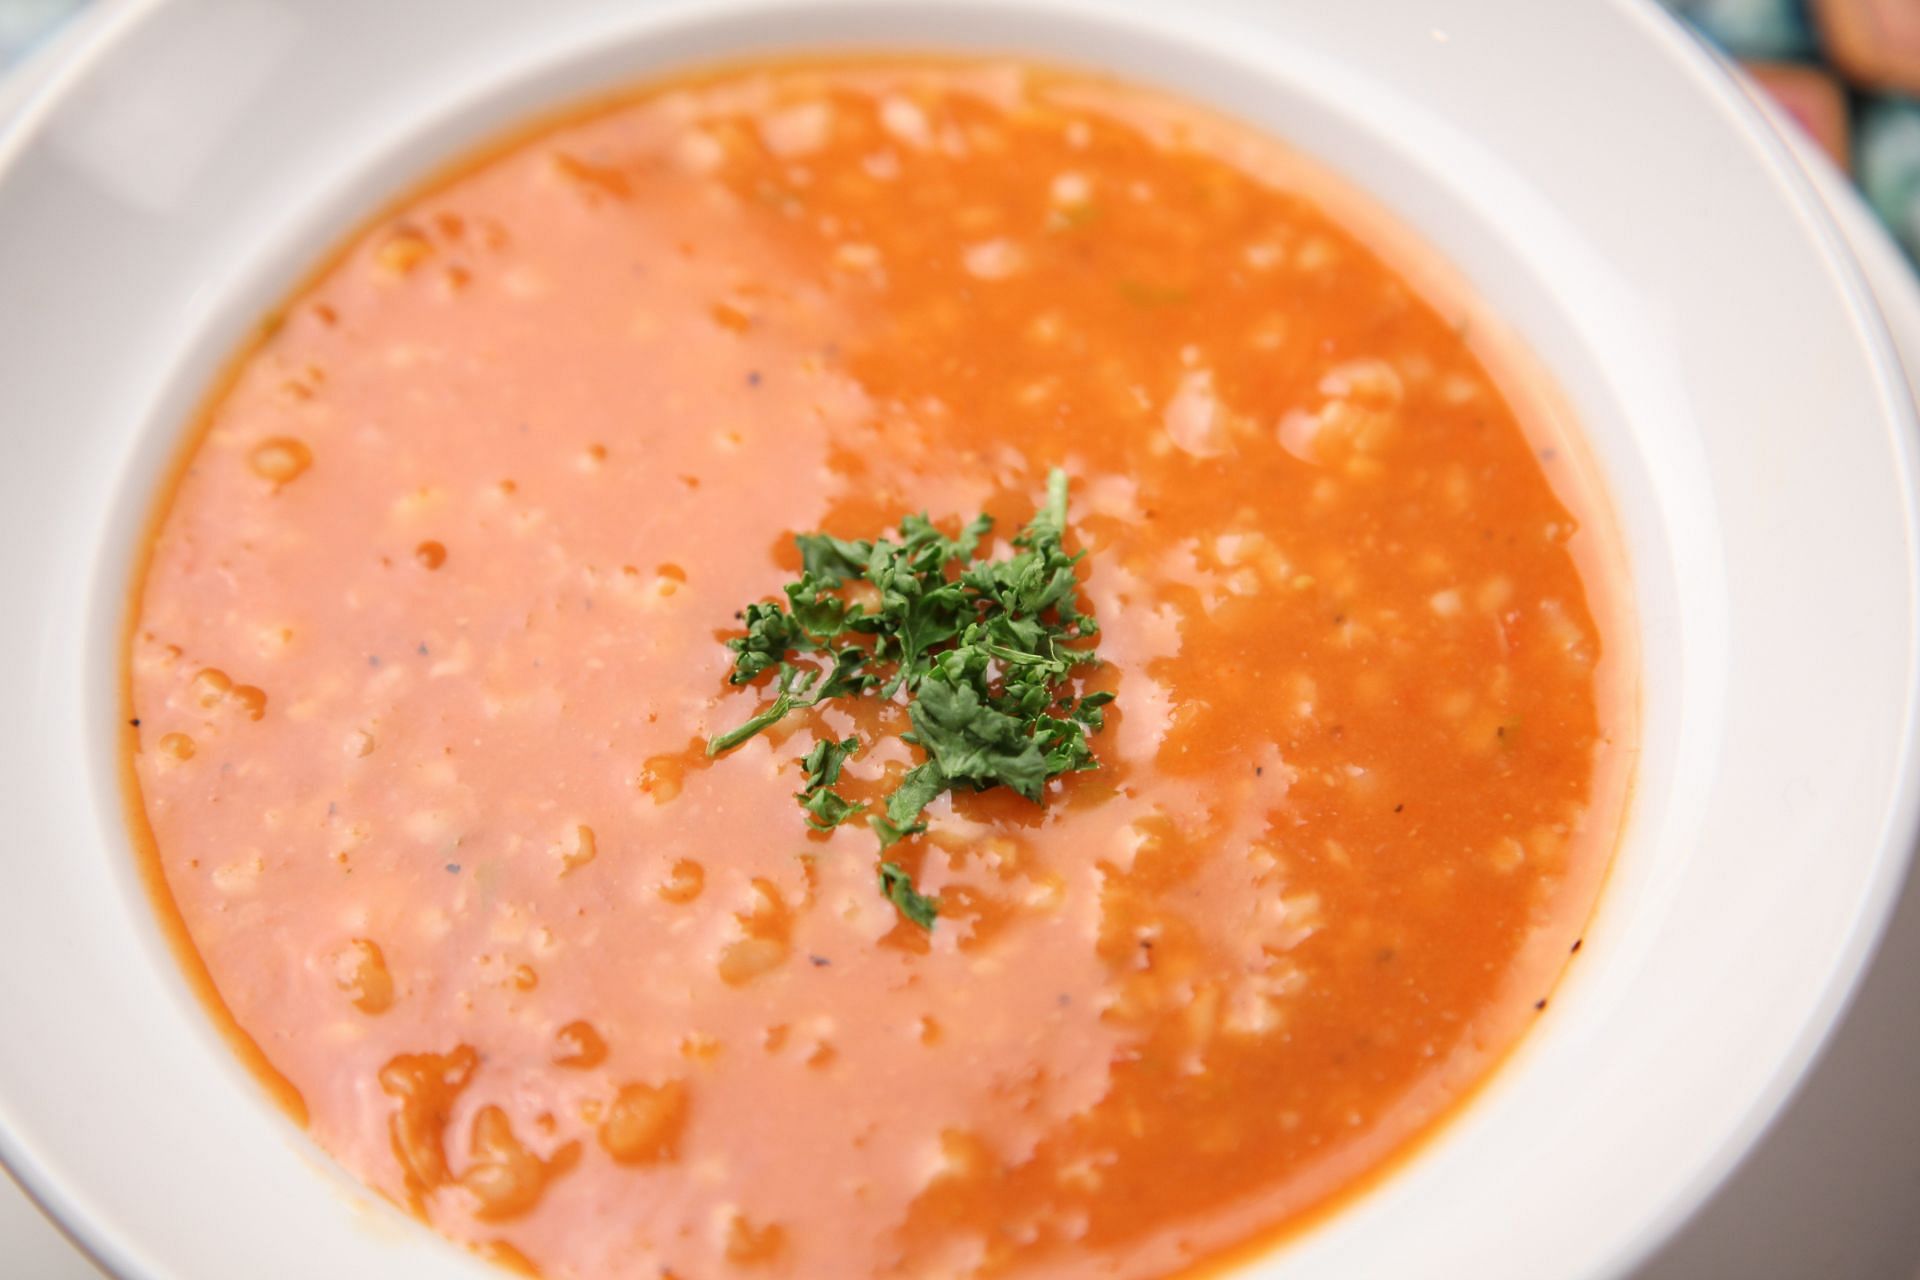 Lentil soup contains lentils and veggies of choice. (Image via Pexels/ Naim Benjelloun)